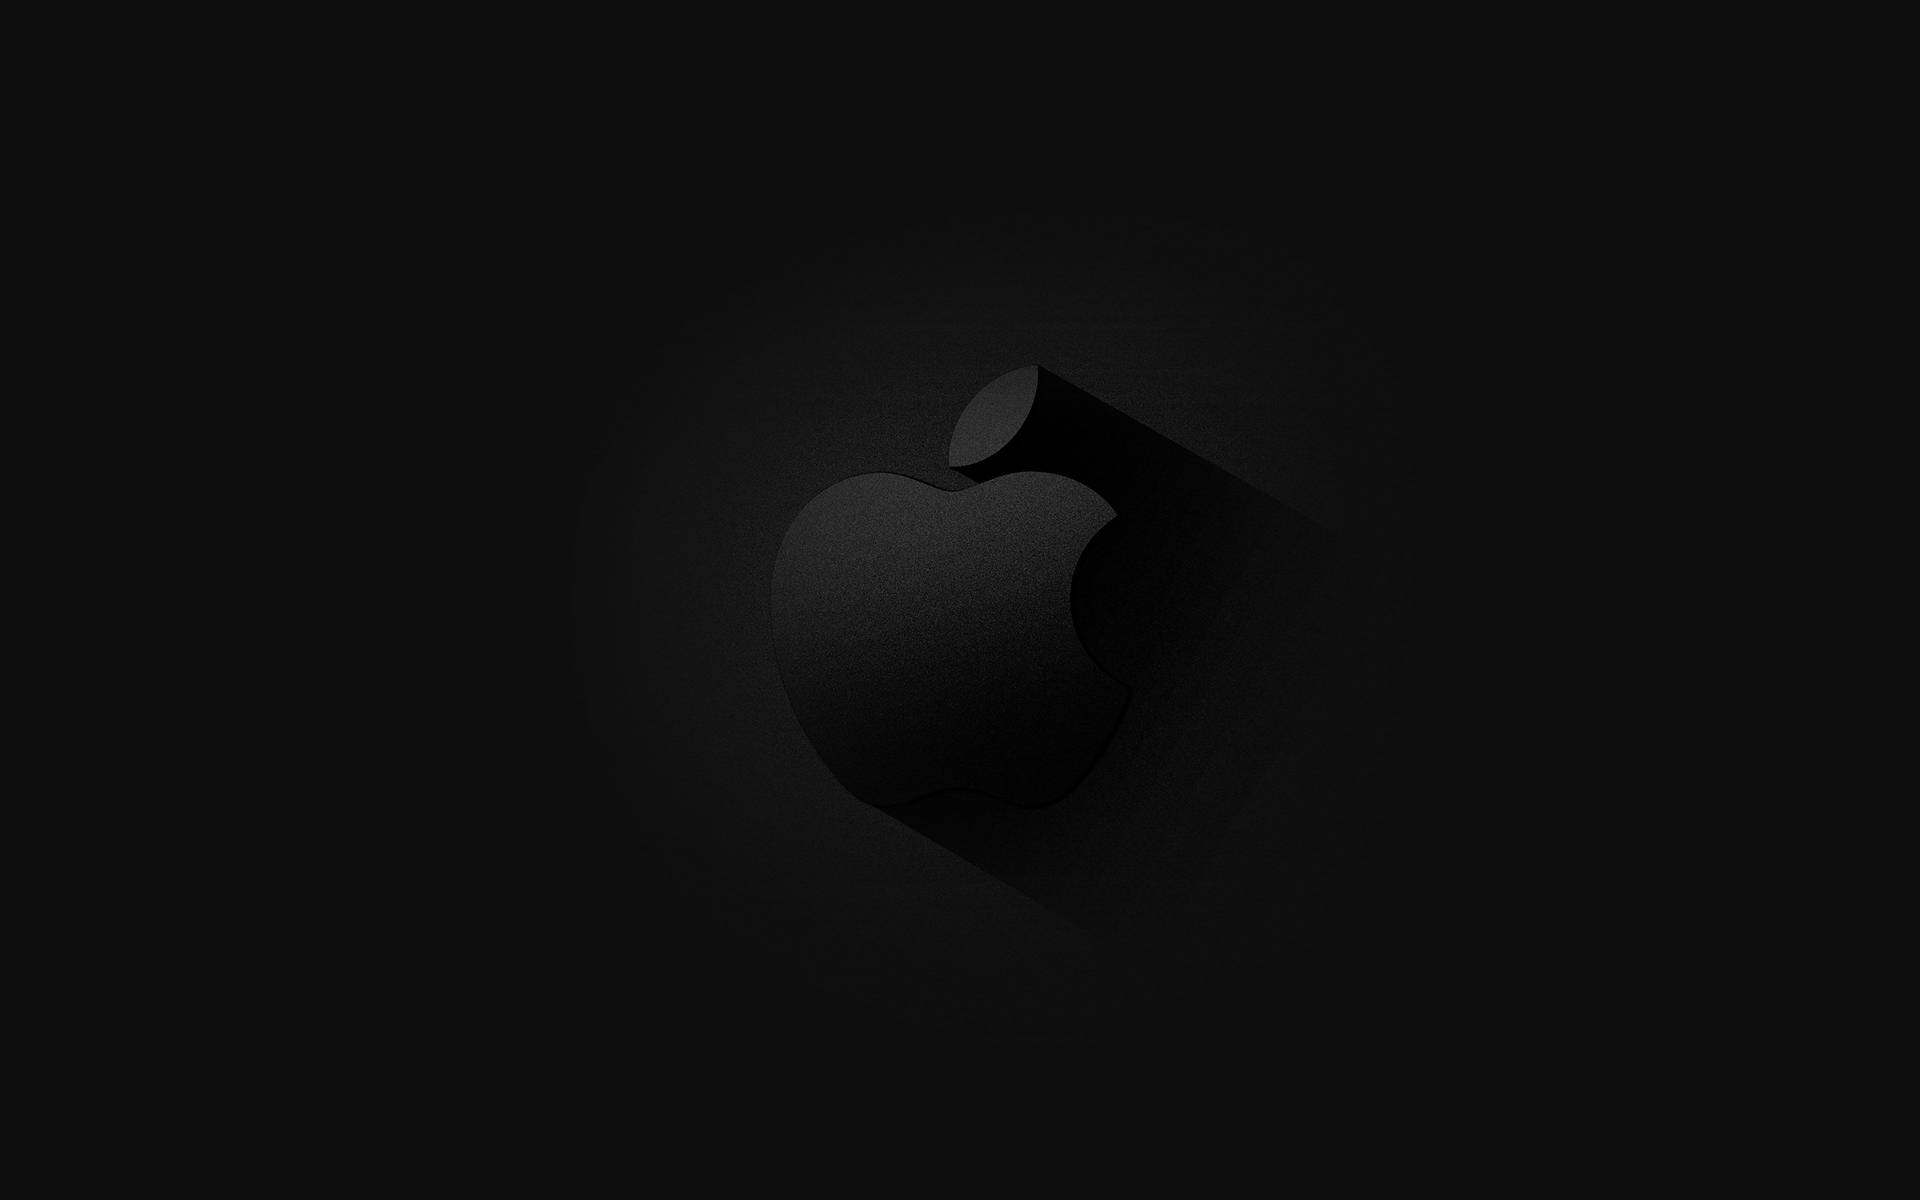 Black Mac Apple Logo Wallpaper